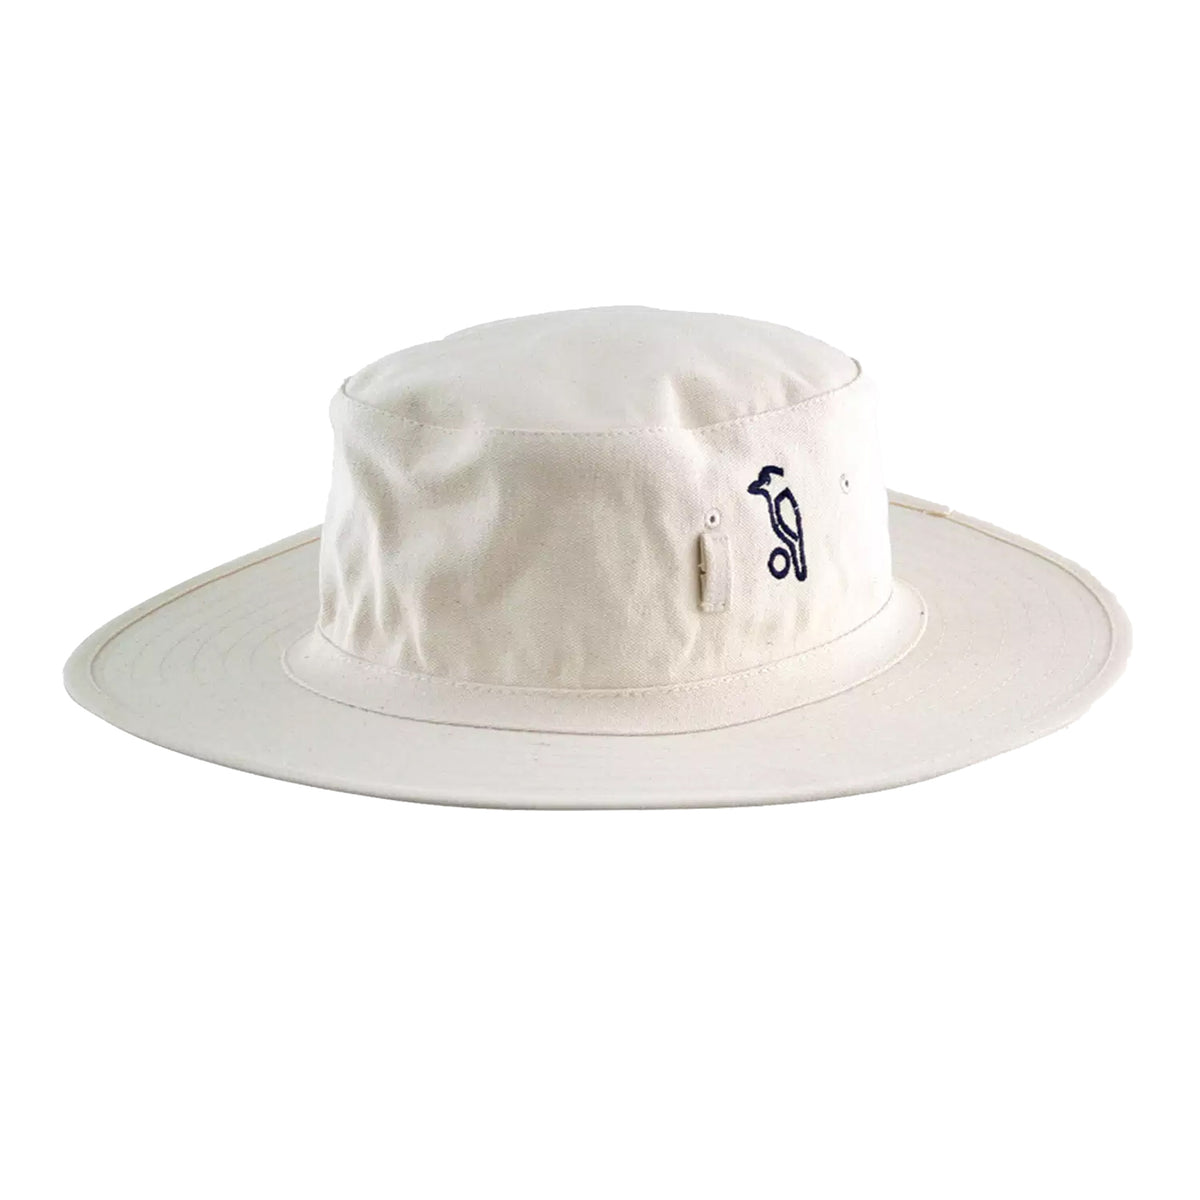 Kookaburra Sun Hat: Cream